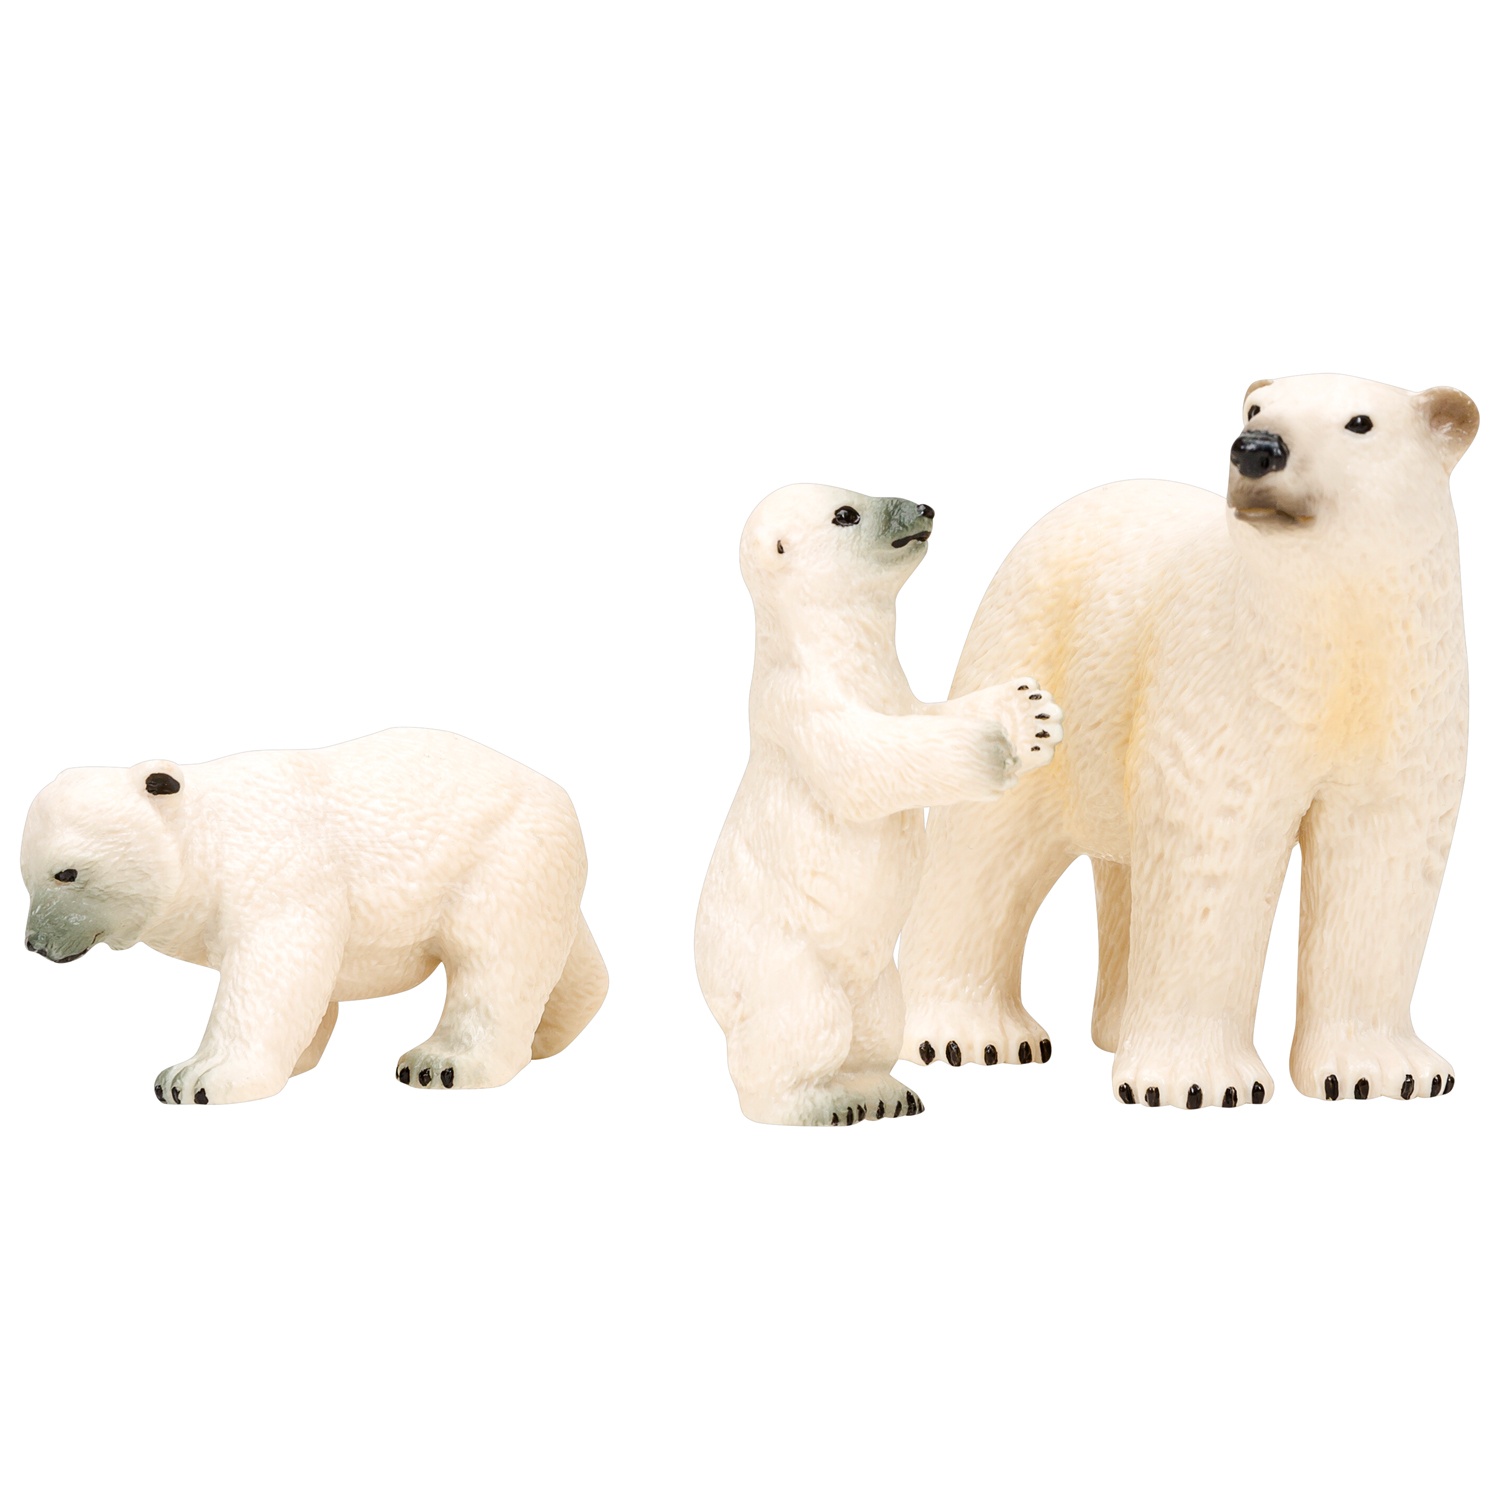 фото Фигурка masai mara мир морских животных , белая медведица и медвежата, 3 предмета